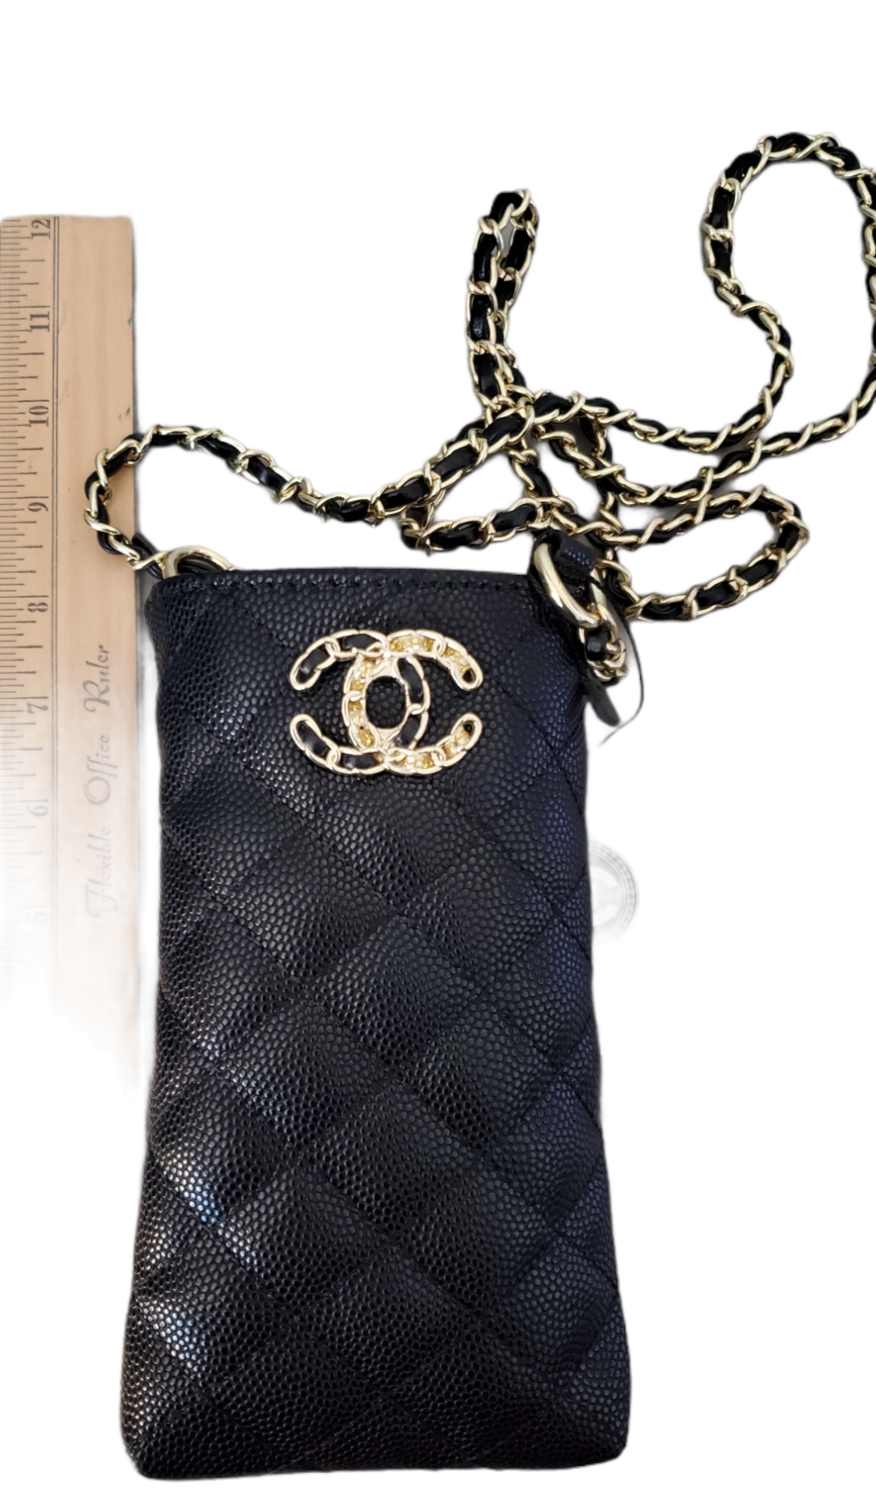 Chanel Small Shoulder/Cross Body Bag